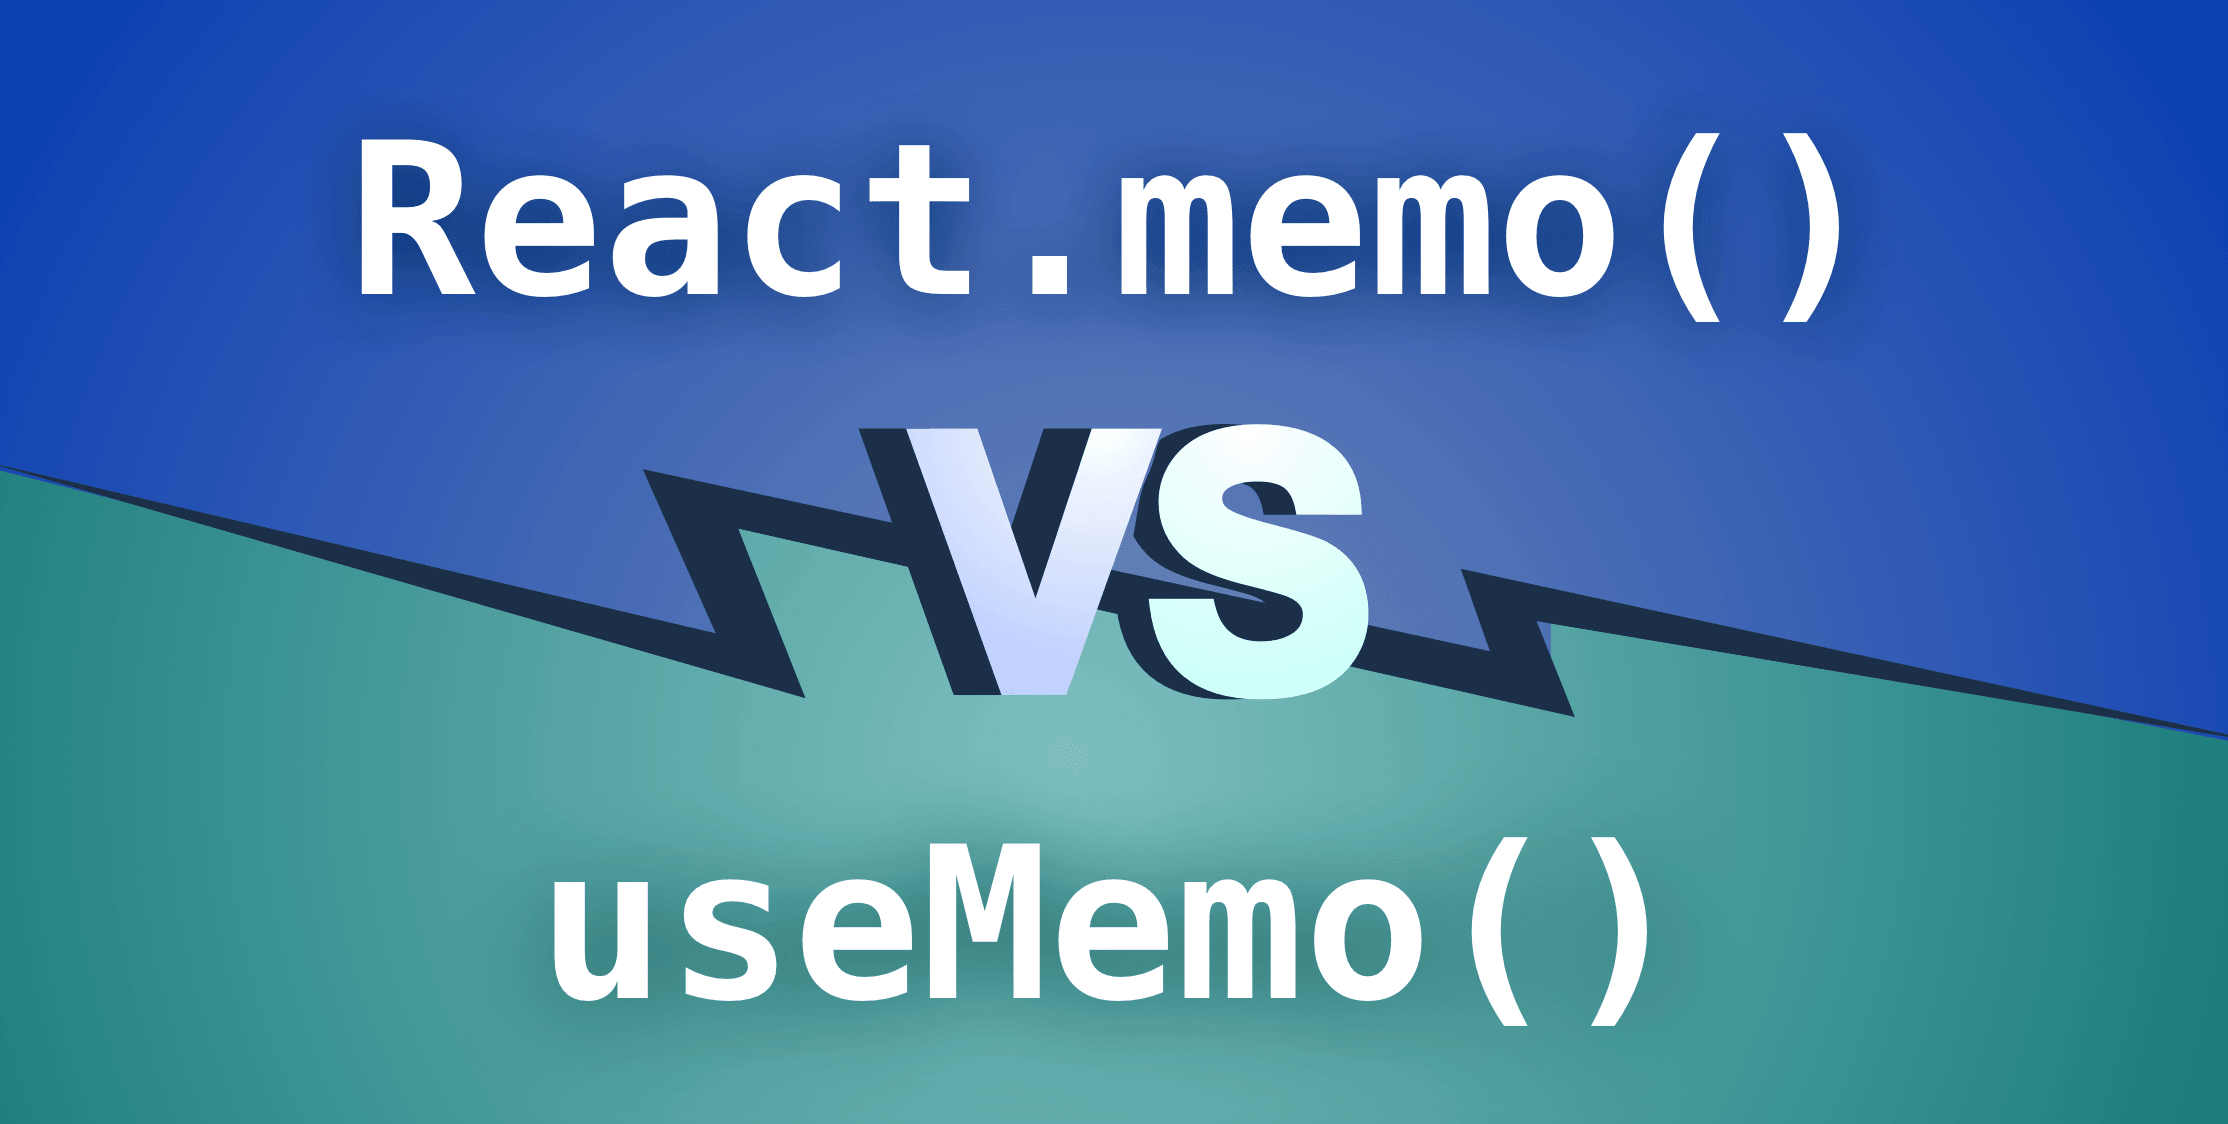 Improving React application performance: React.memo vs useMemo